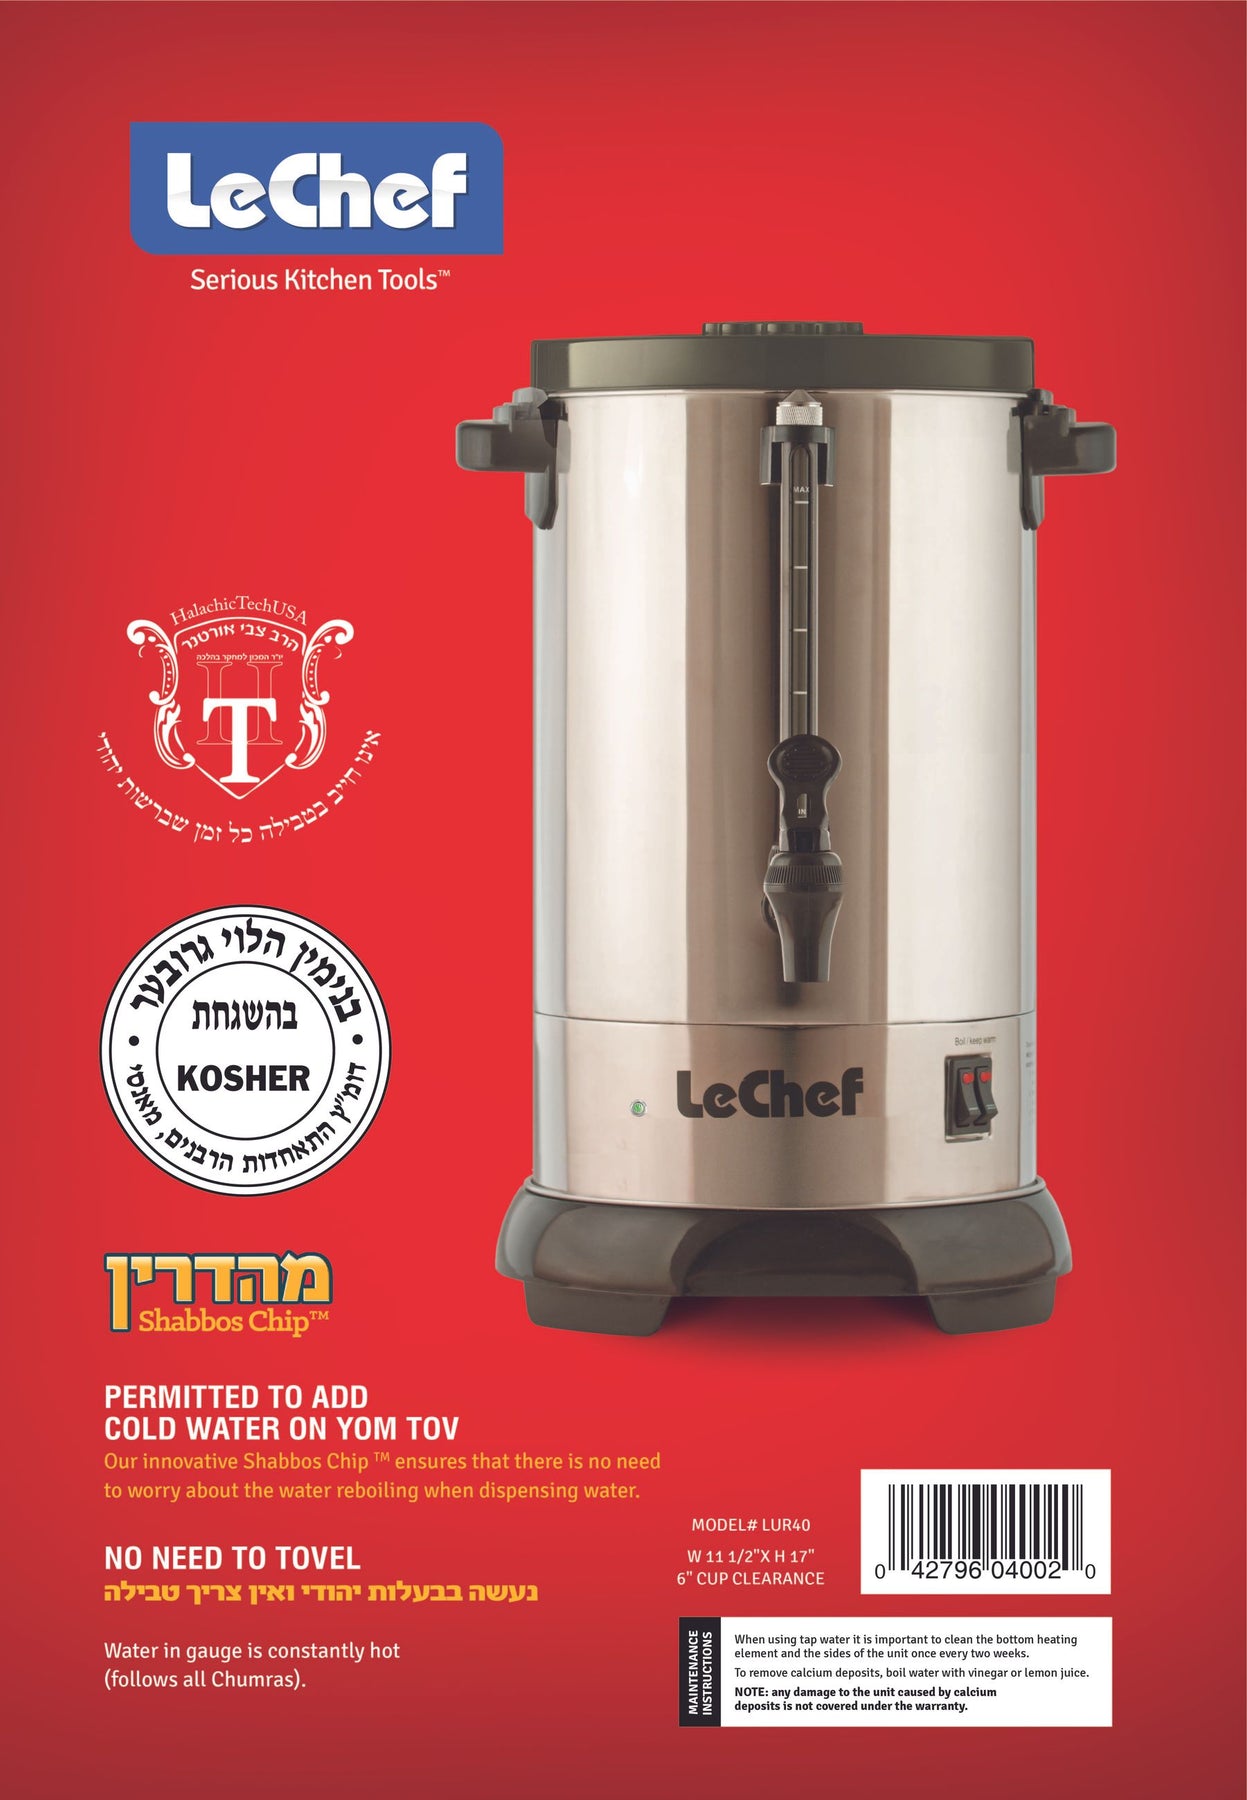 Elite Stainless Steel 40-Cup Coffee Urn & Hot Water Dispenser